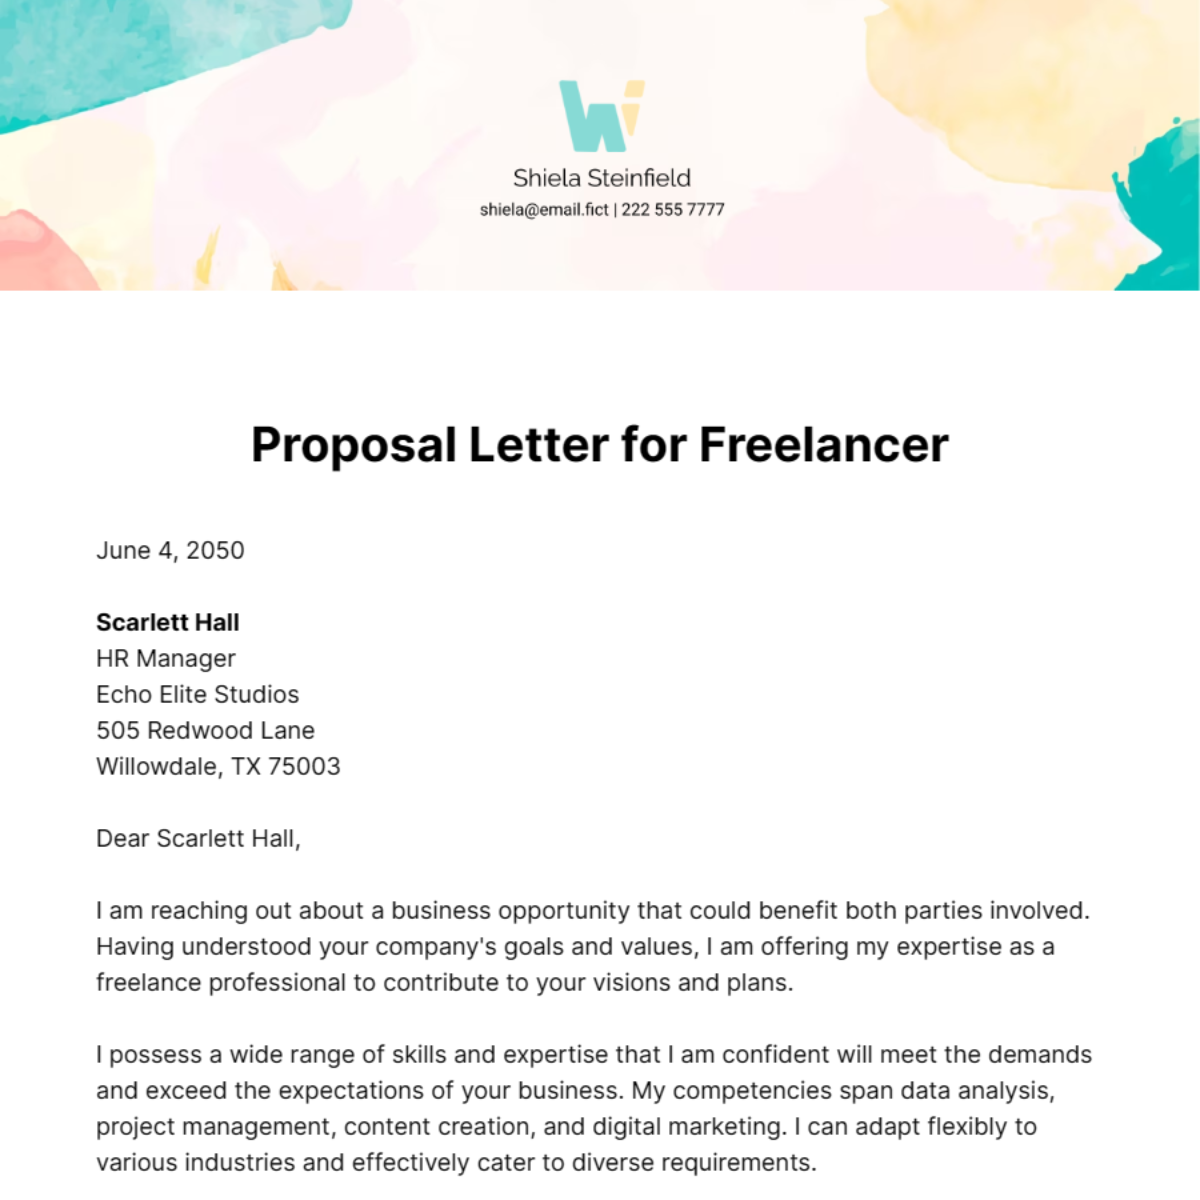 Proposal Letter for Freelancer Template